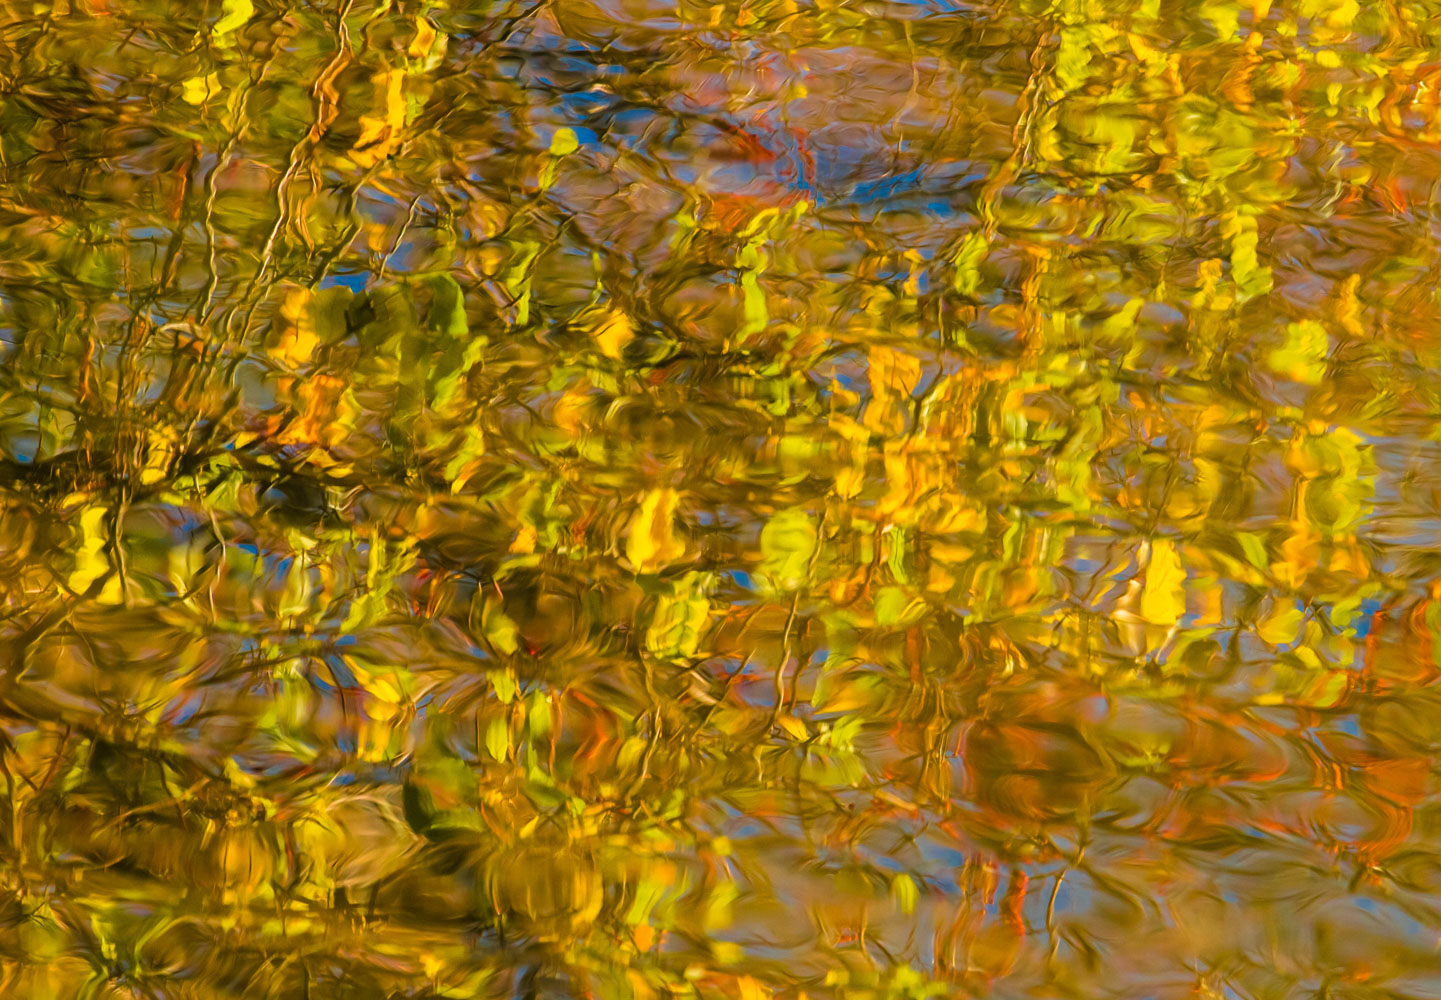  Liquid Light: Golden Radiance No. 1 